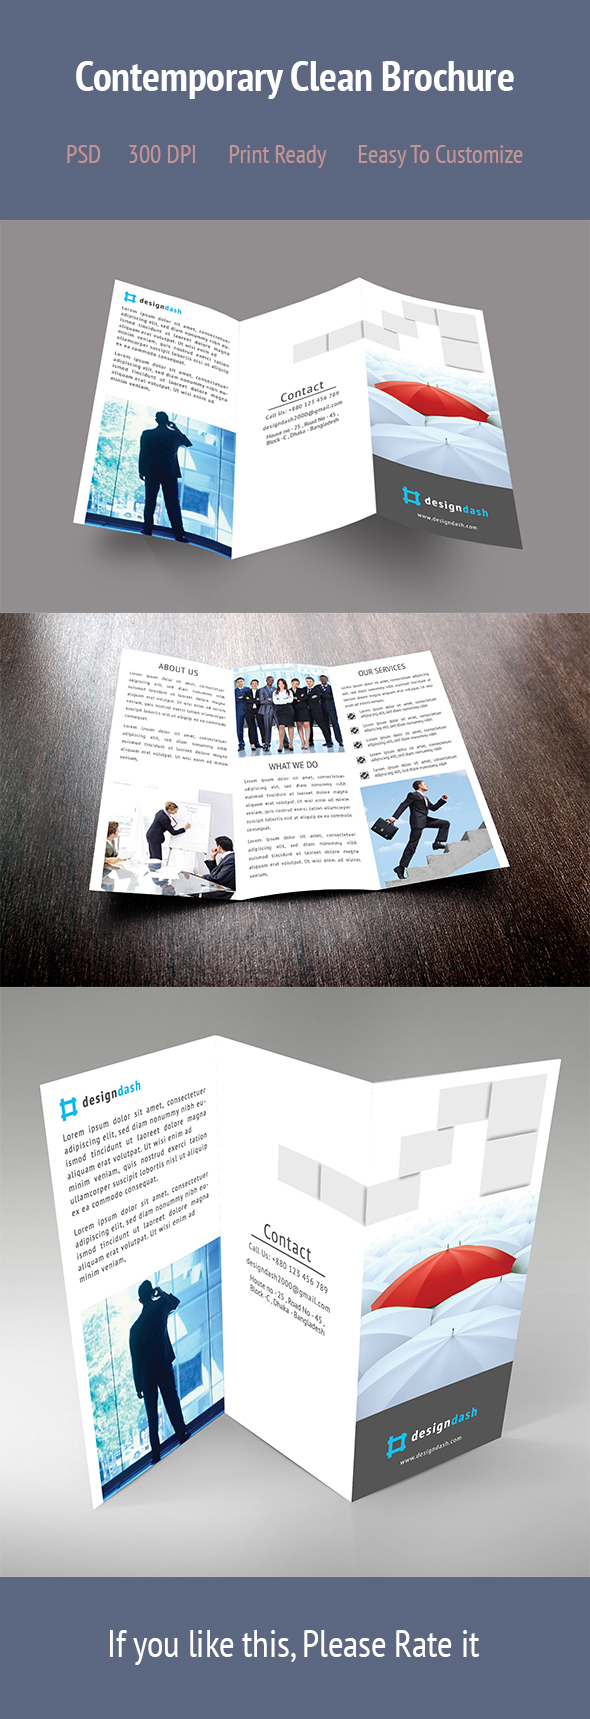 3 fold blue brochure business clean corporate creative elegant flat fresh furniture Interior marketing   Office printed